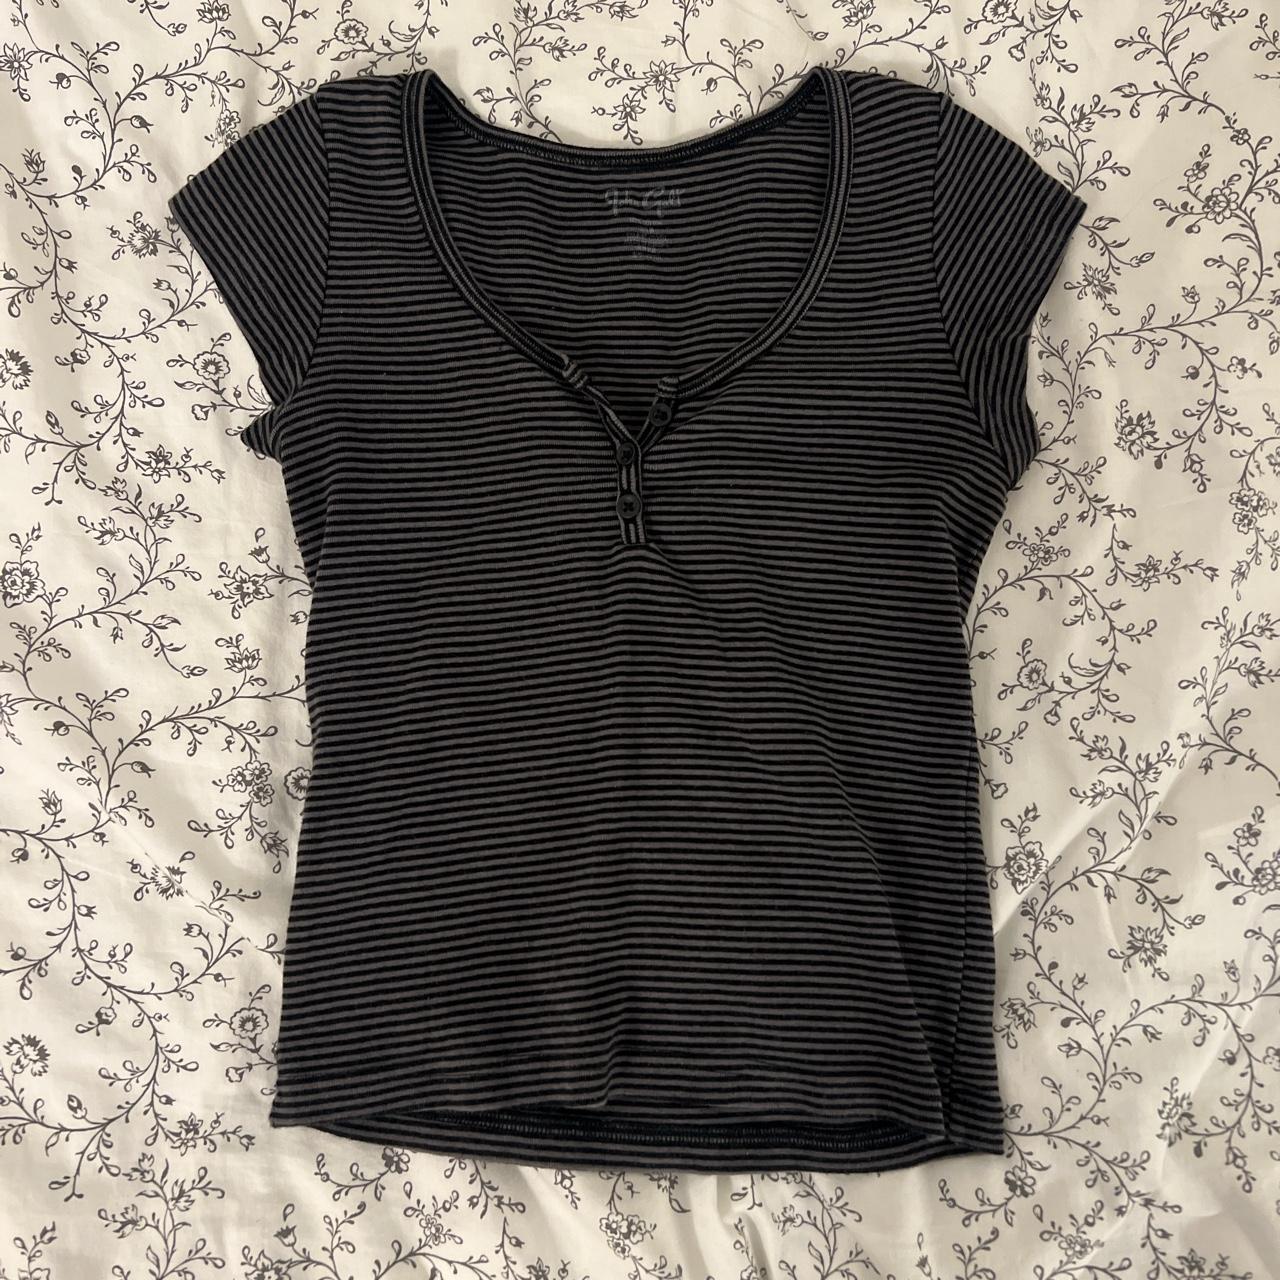 Brandy Melville Women's Black and Grey Shirt